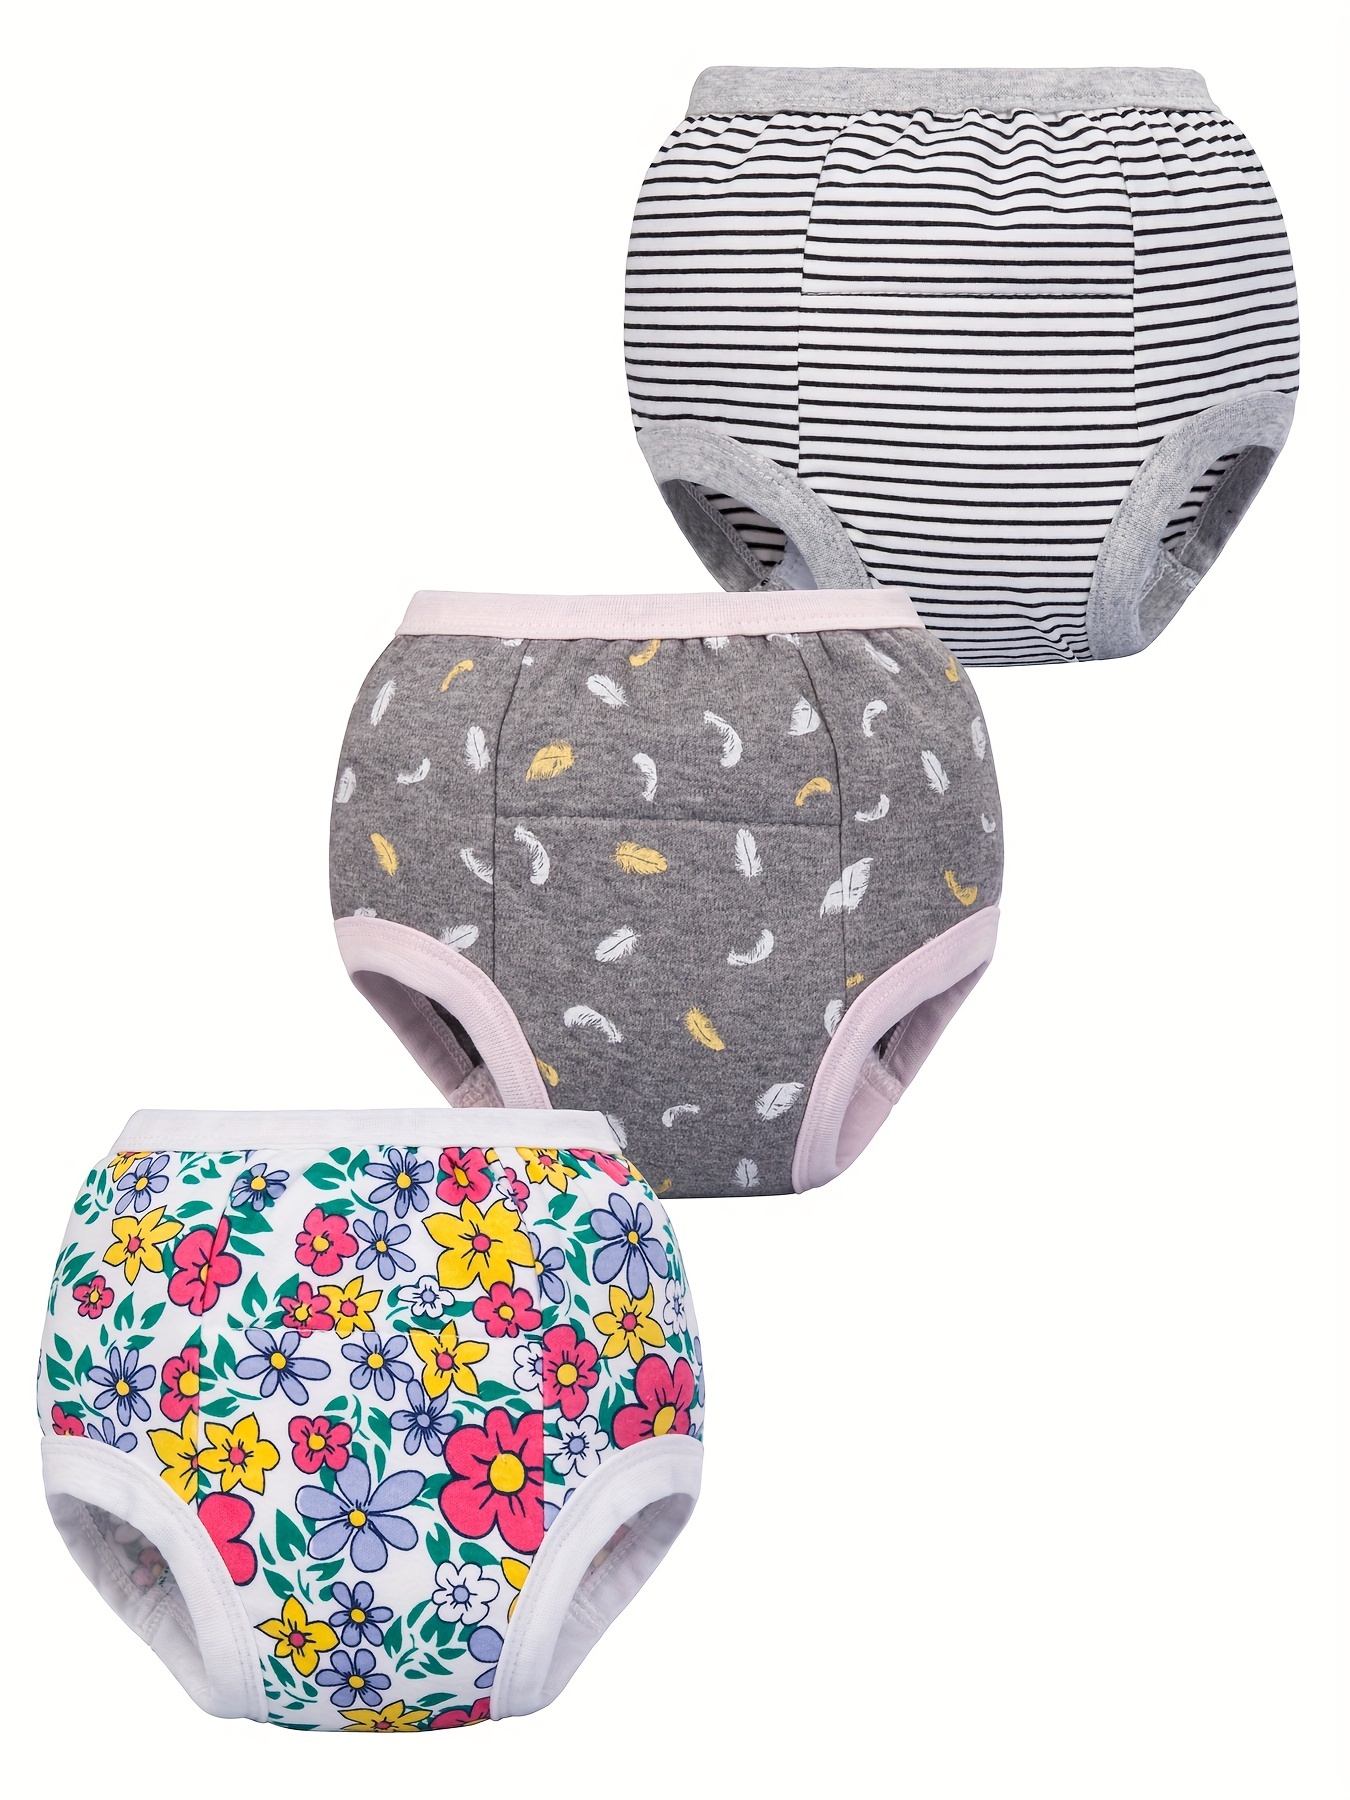  MooMoo Baby Potty Training Underwear for Boys